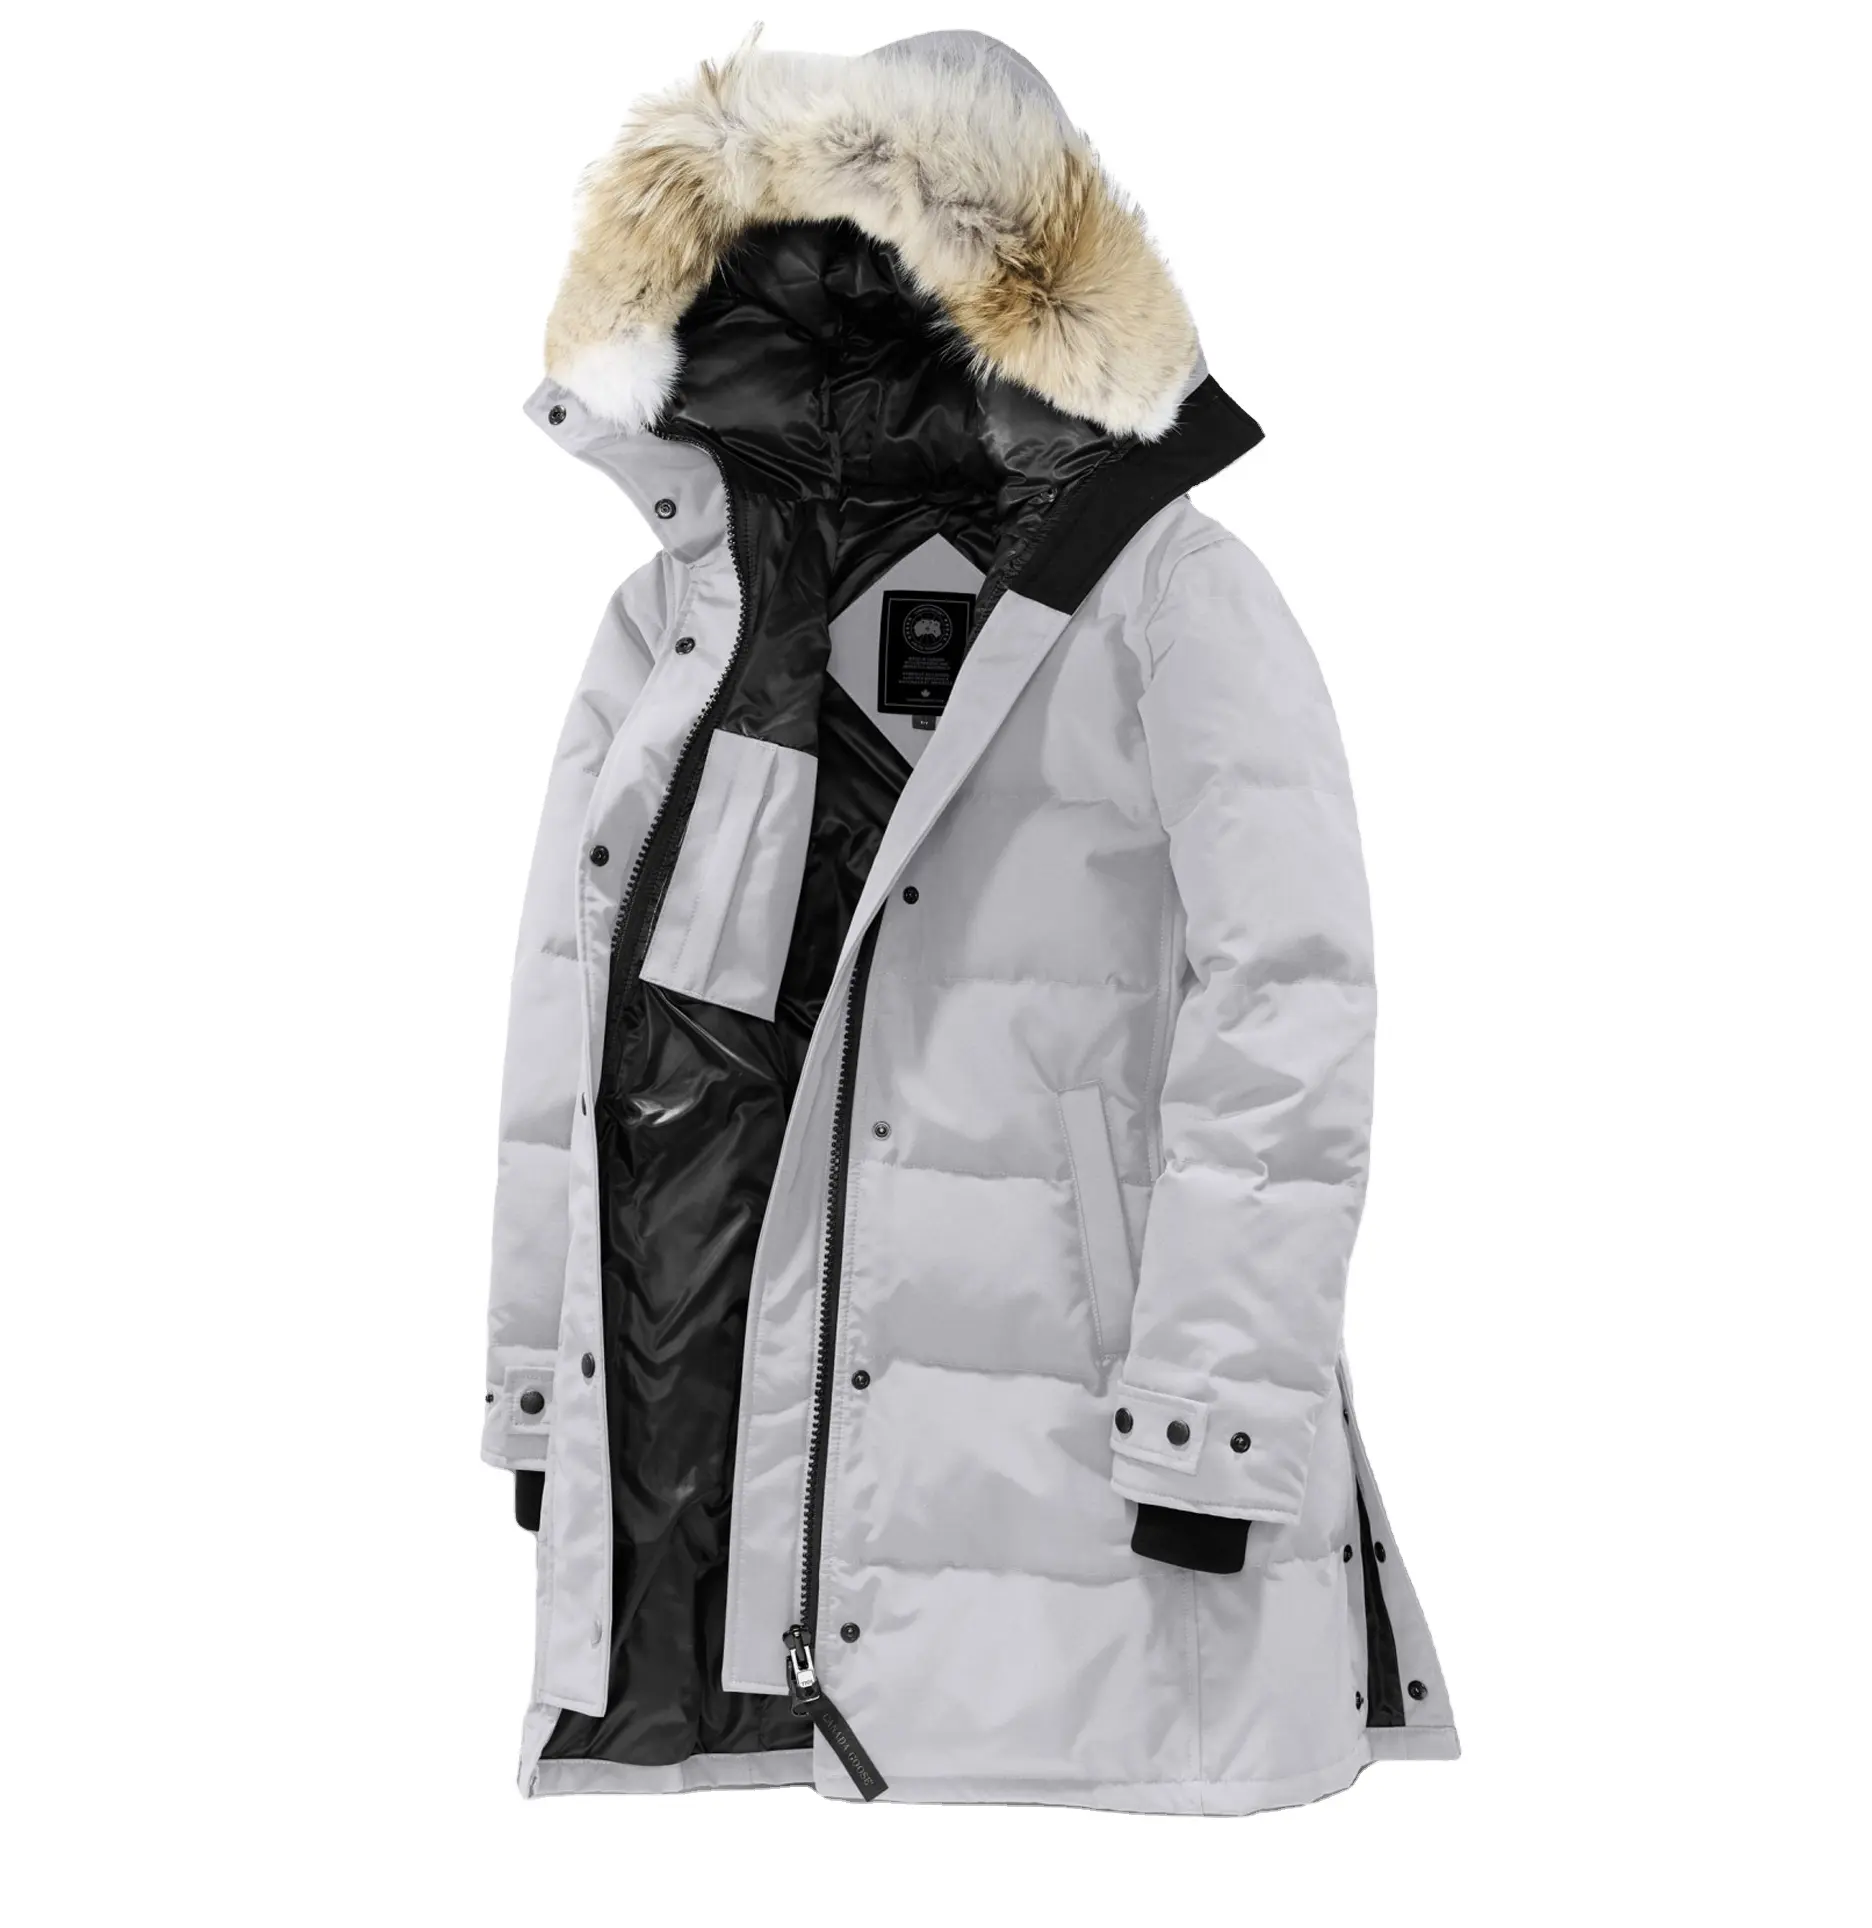 With 2 pocket / fur hooded Women Winter fall Street wear parka Jacket Latest Design Hot Sale Fashion Long Ladies Coats Parkas